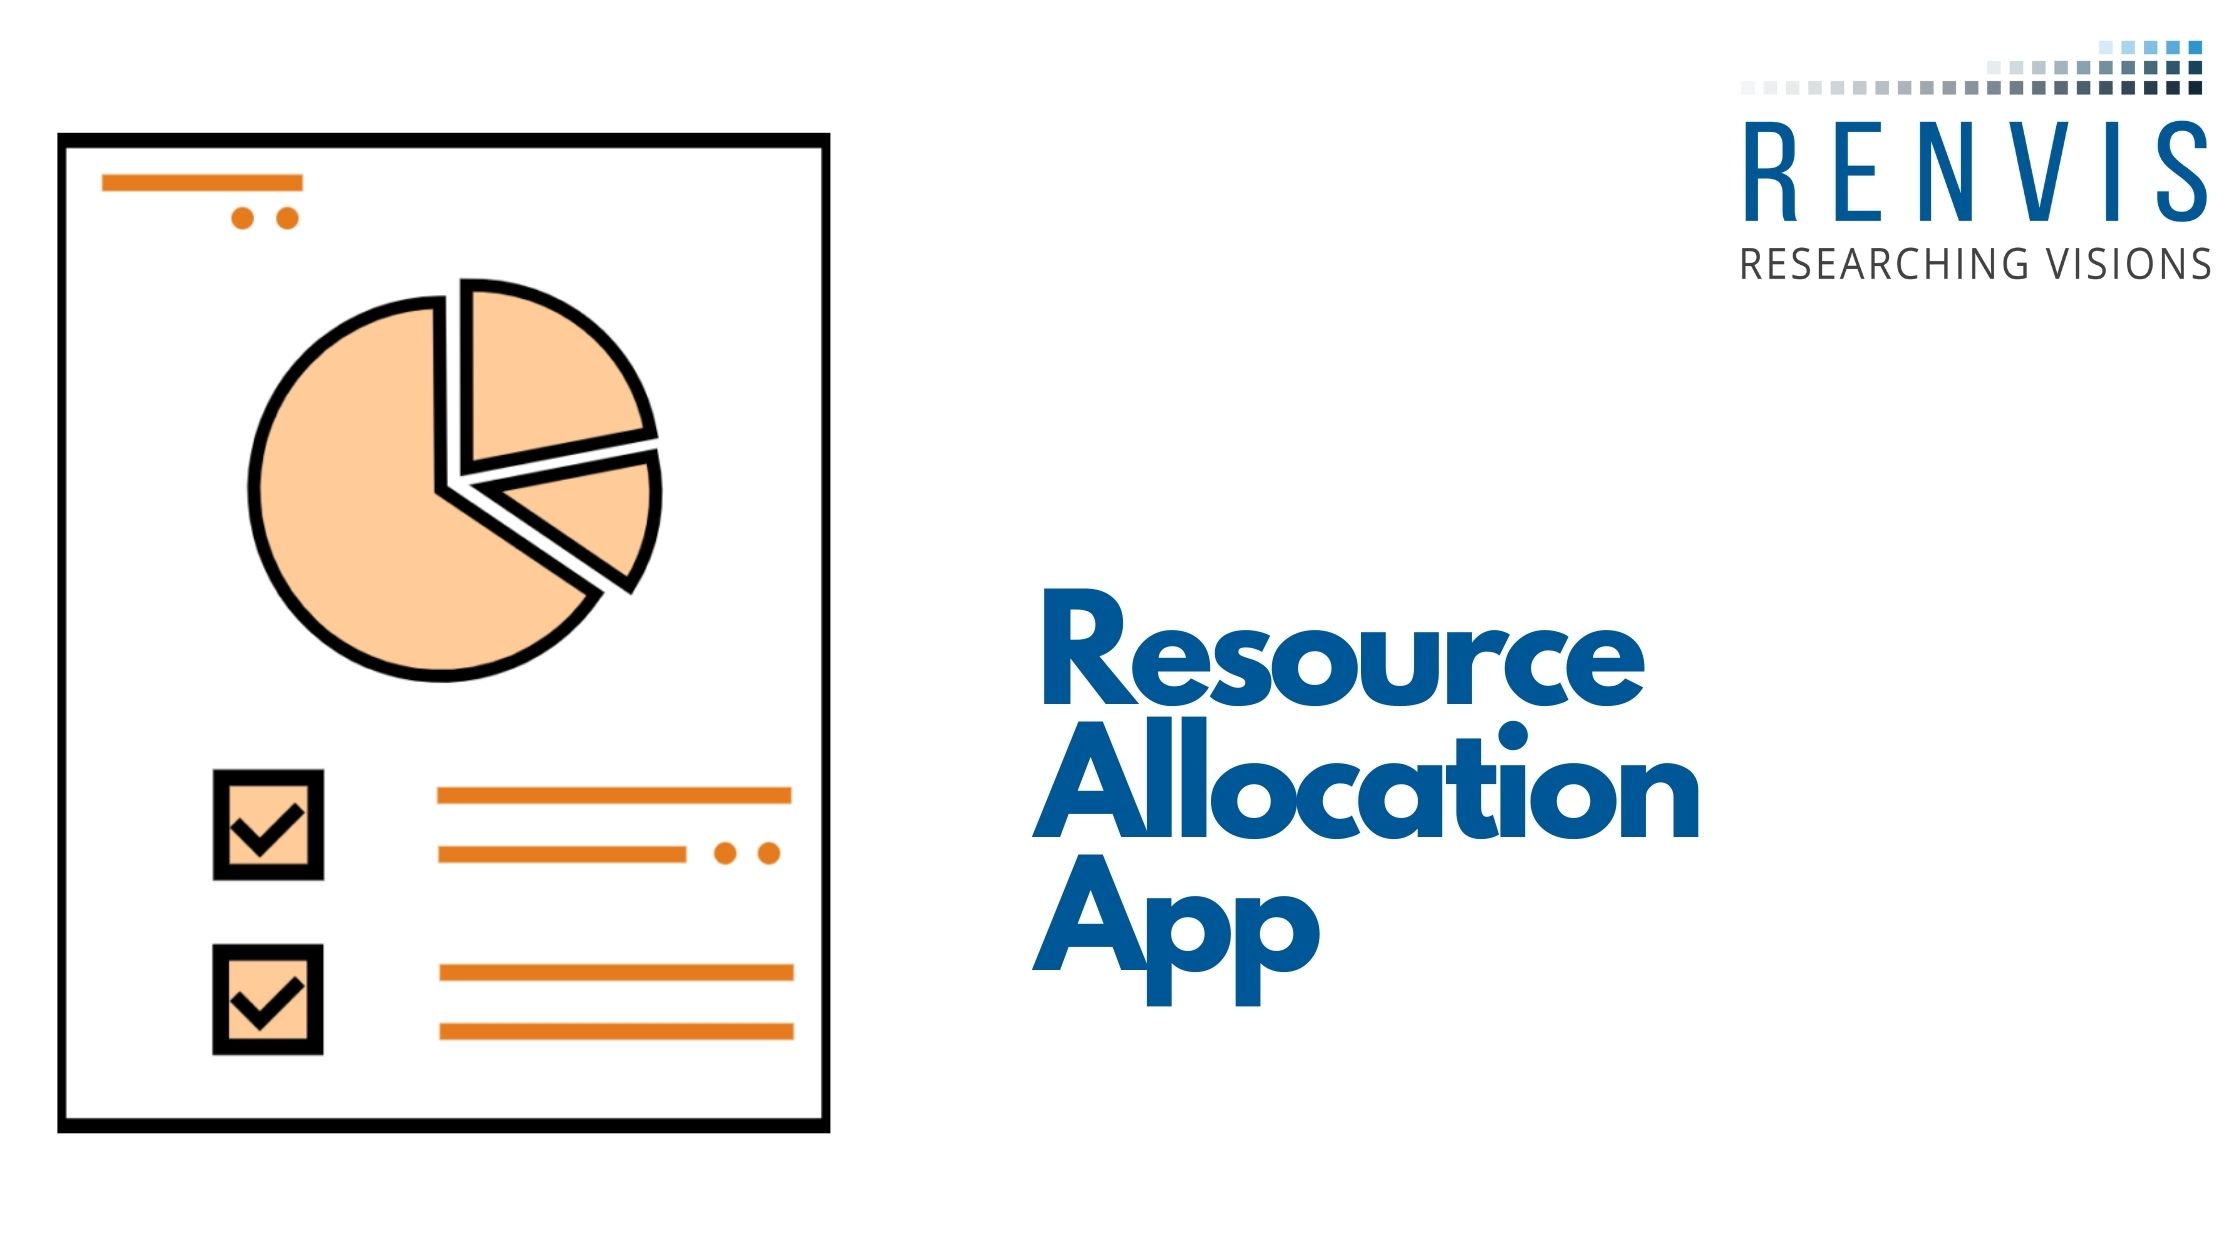 Resource Allocation App